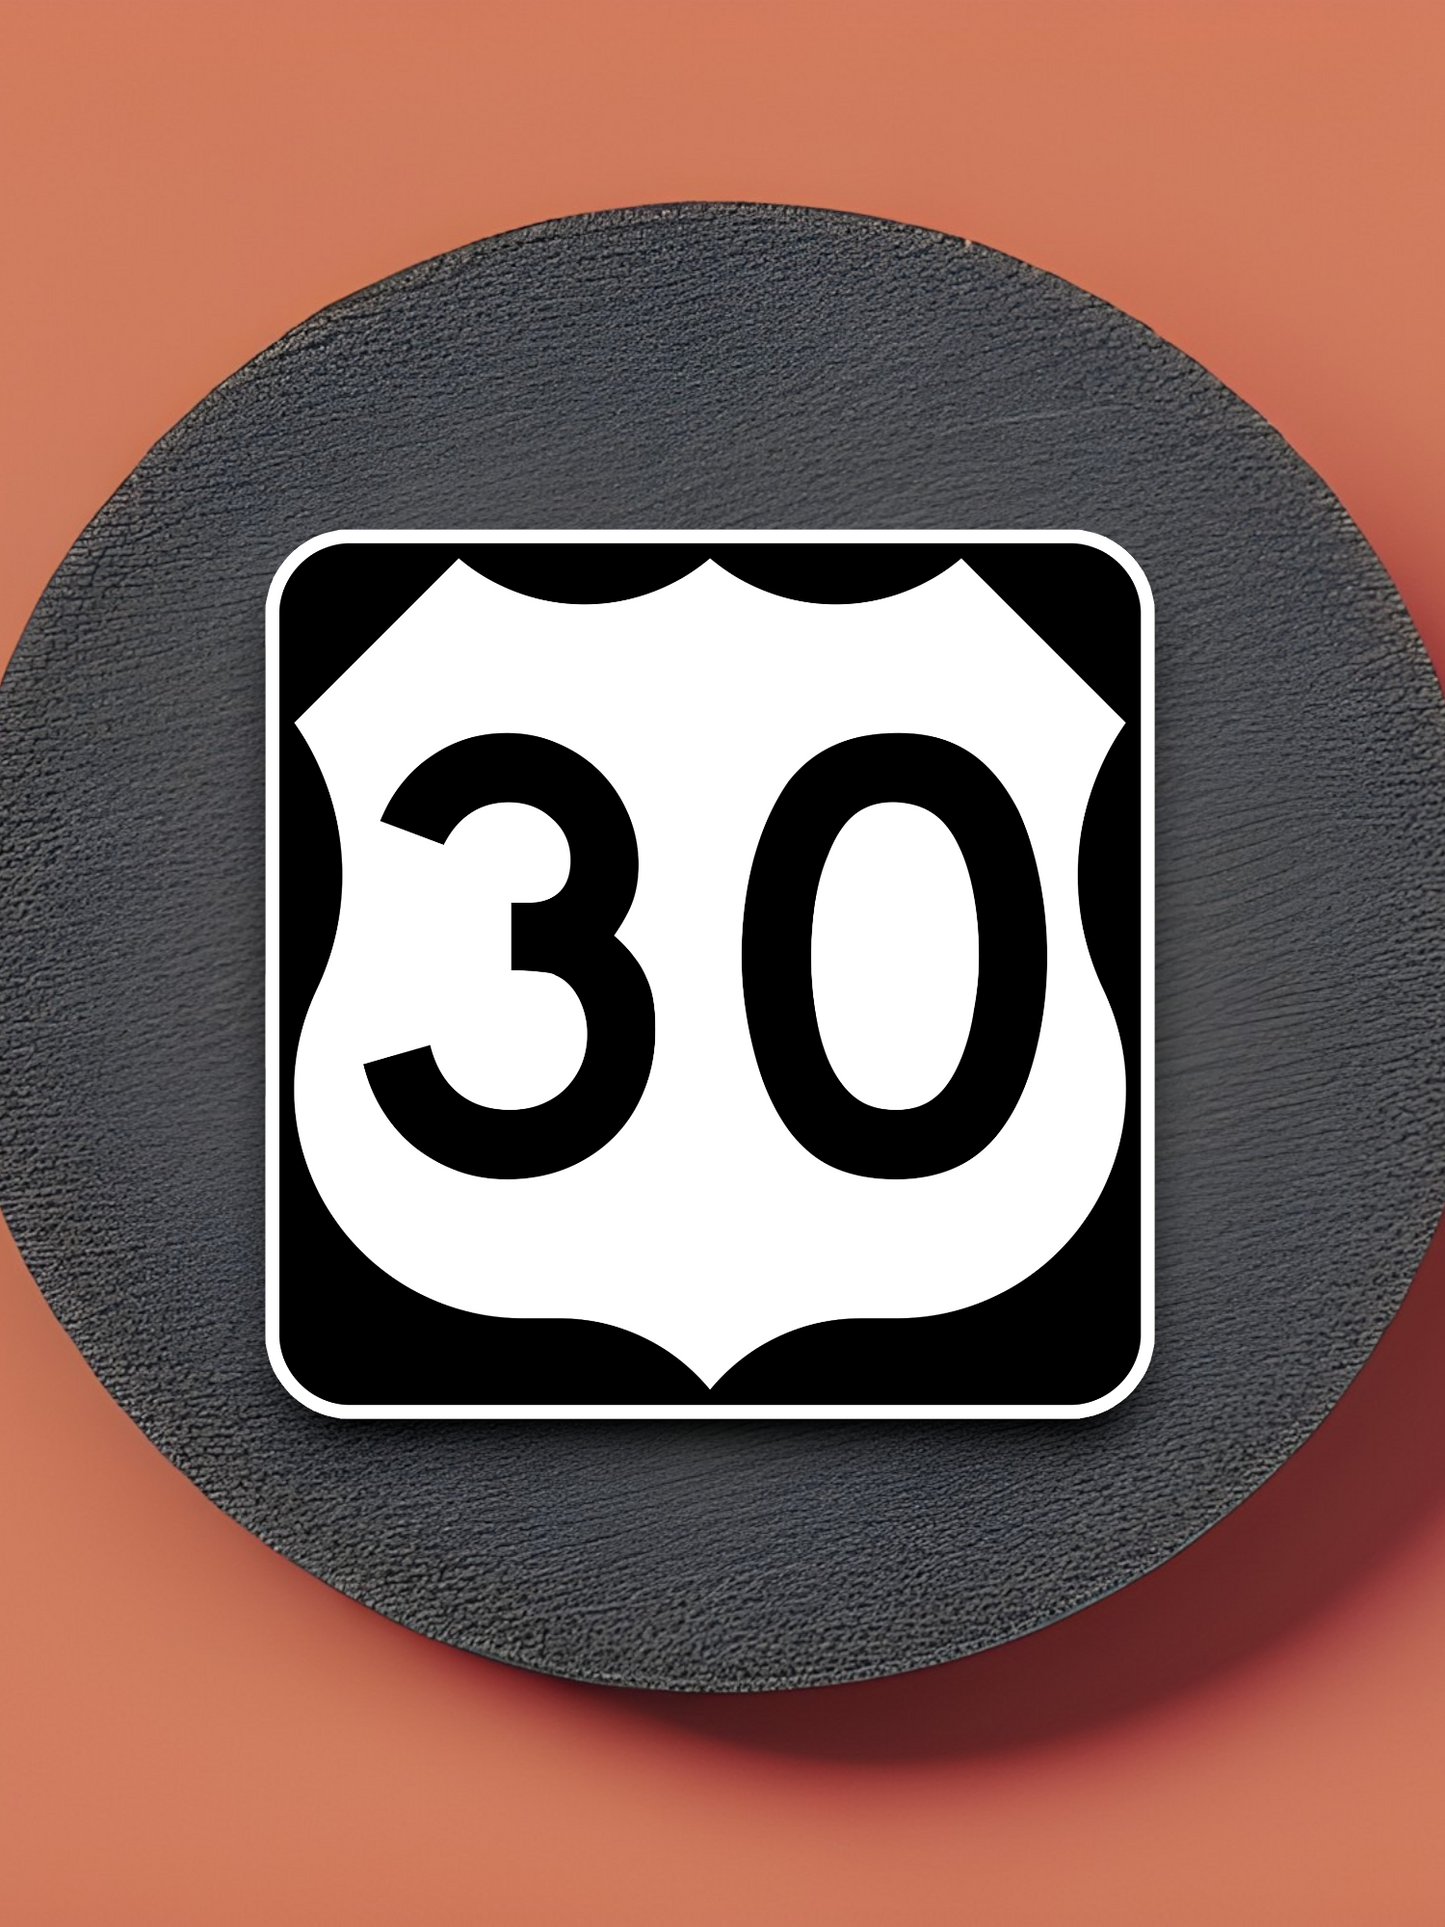 U.S. Route 30 Road Sign Sticker